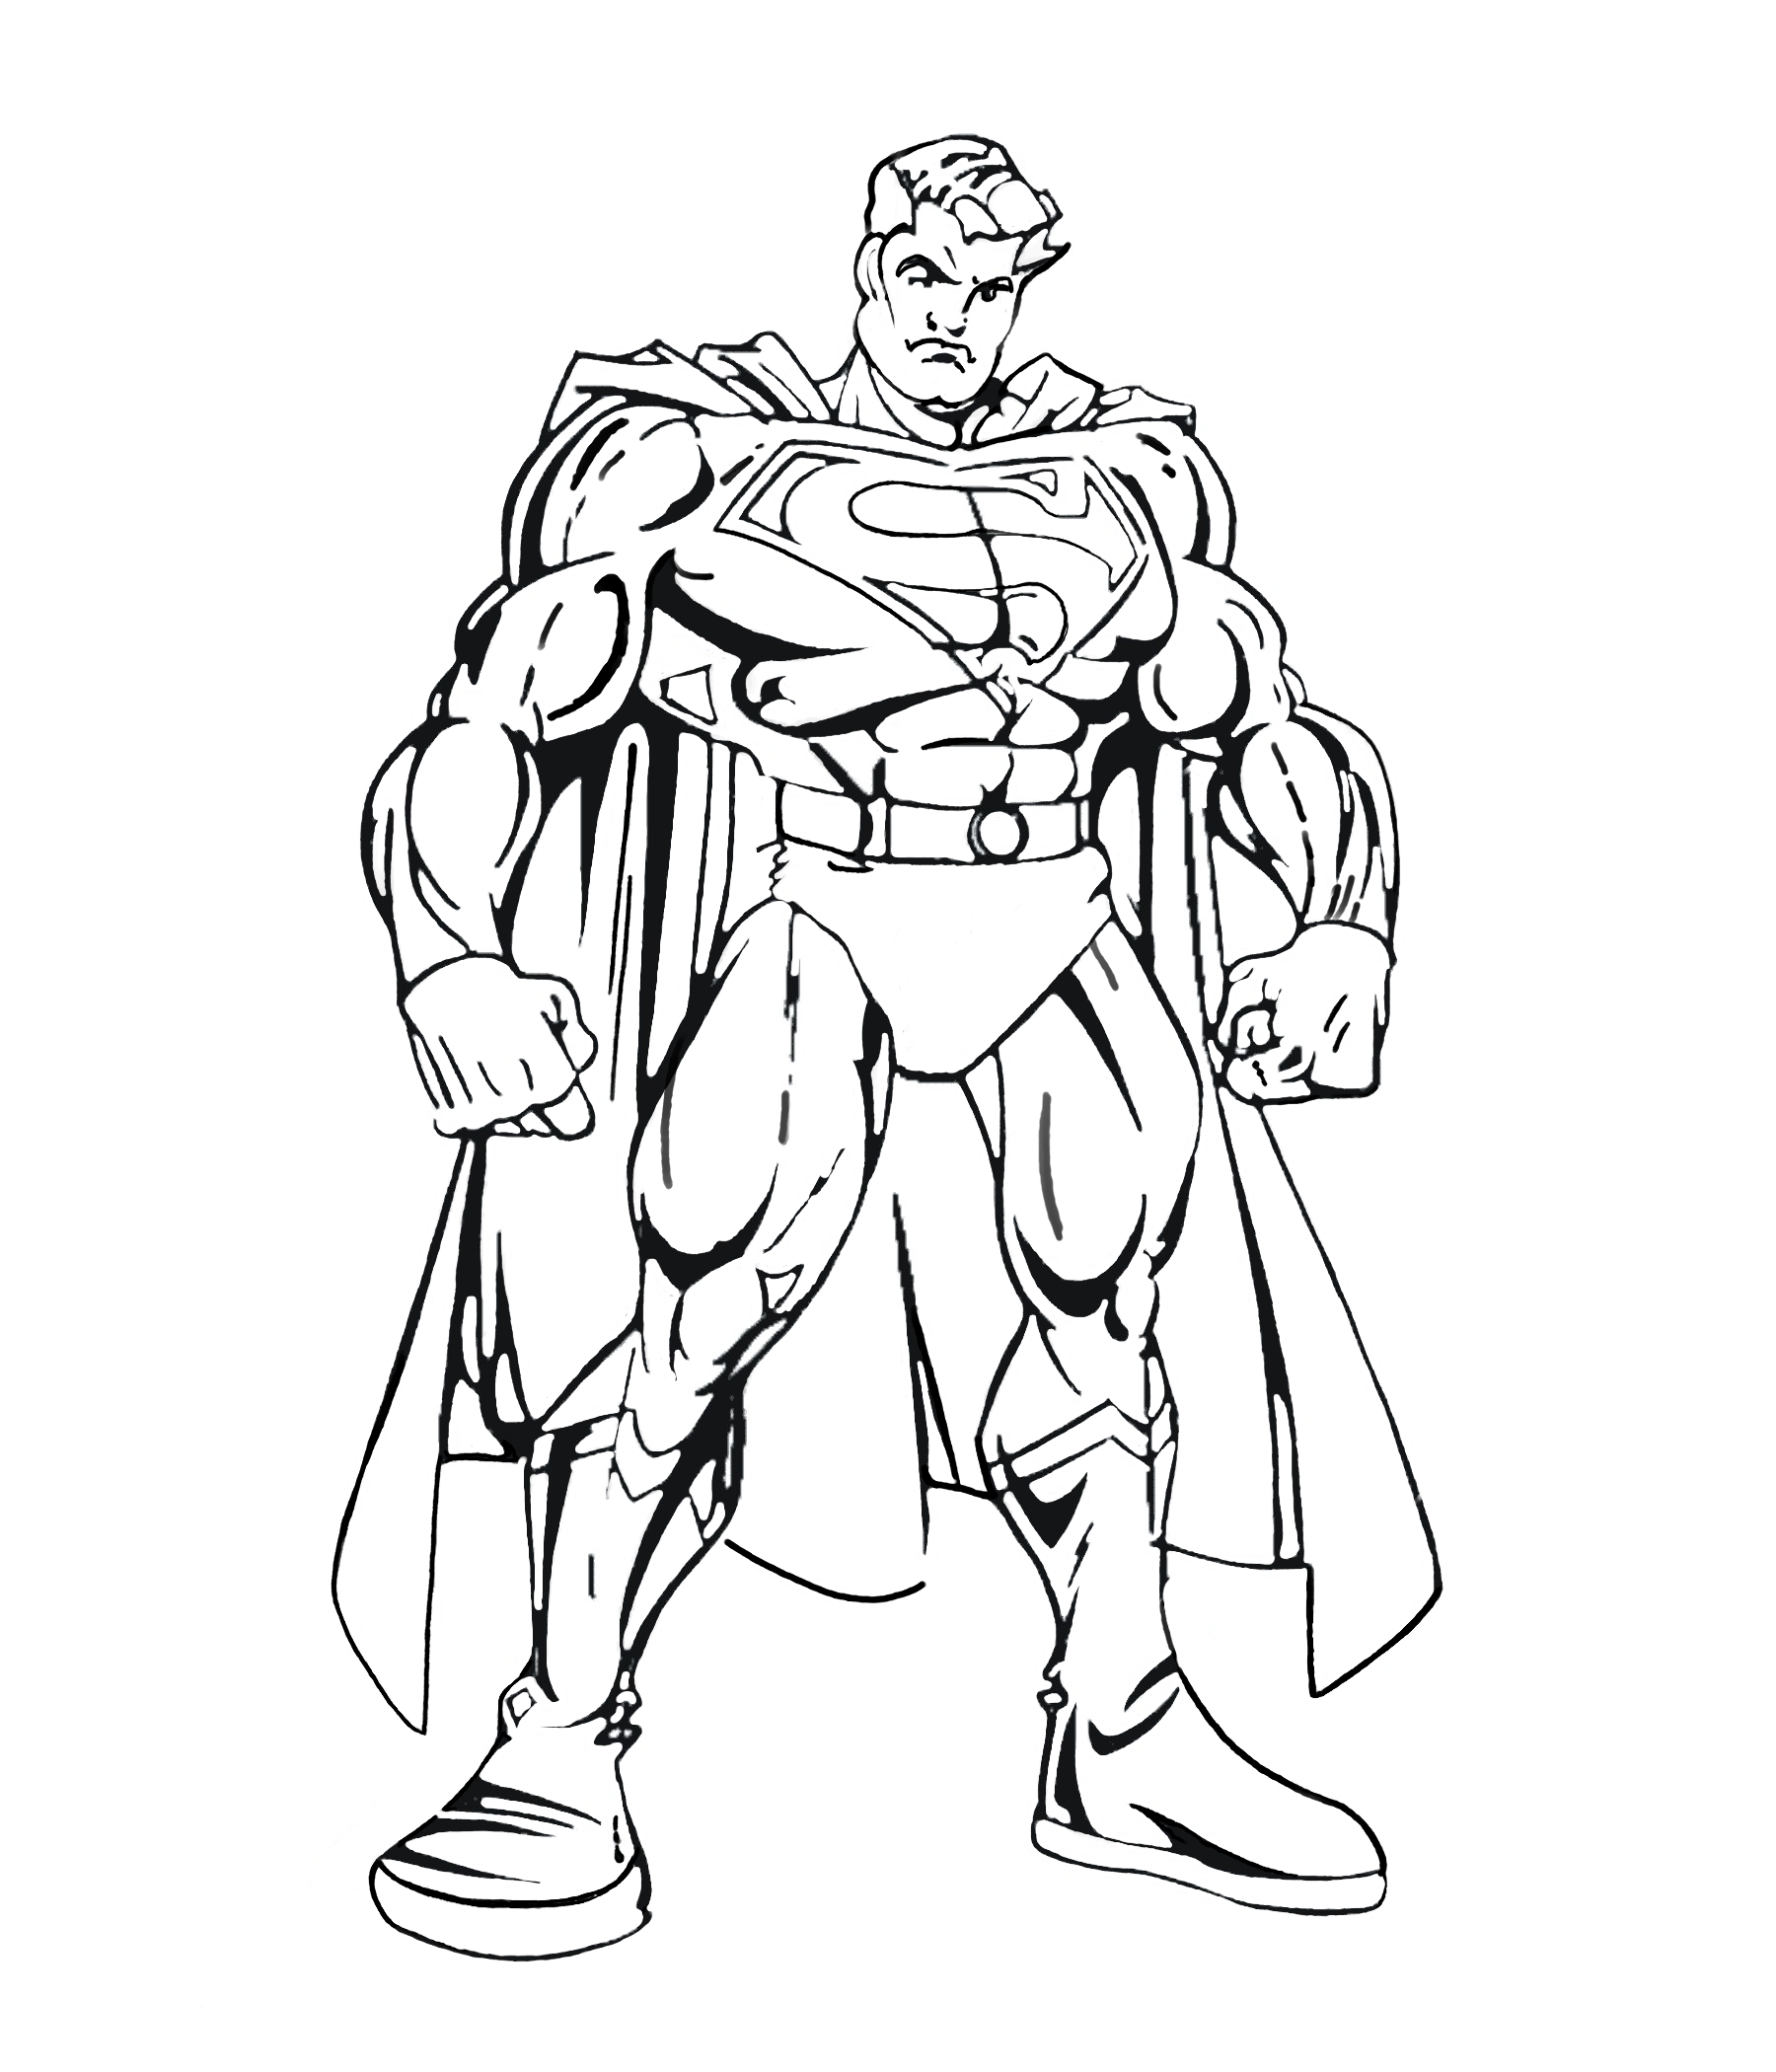 A Superman no le faltan músculos